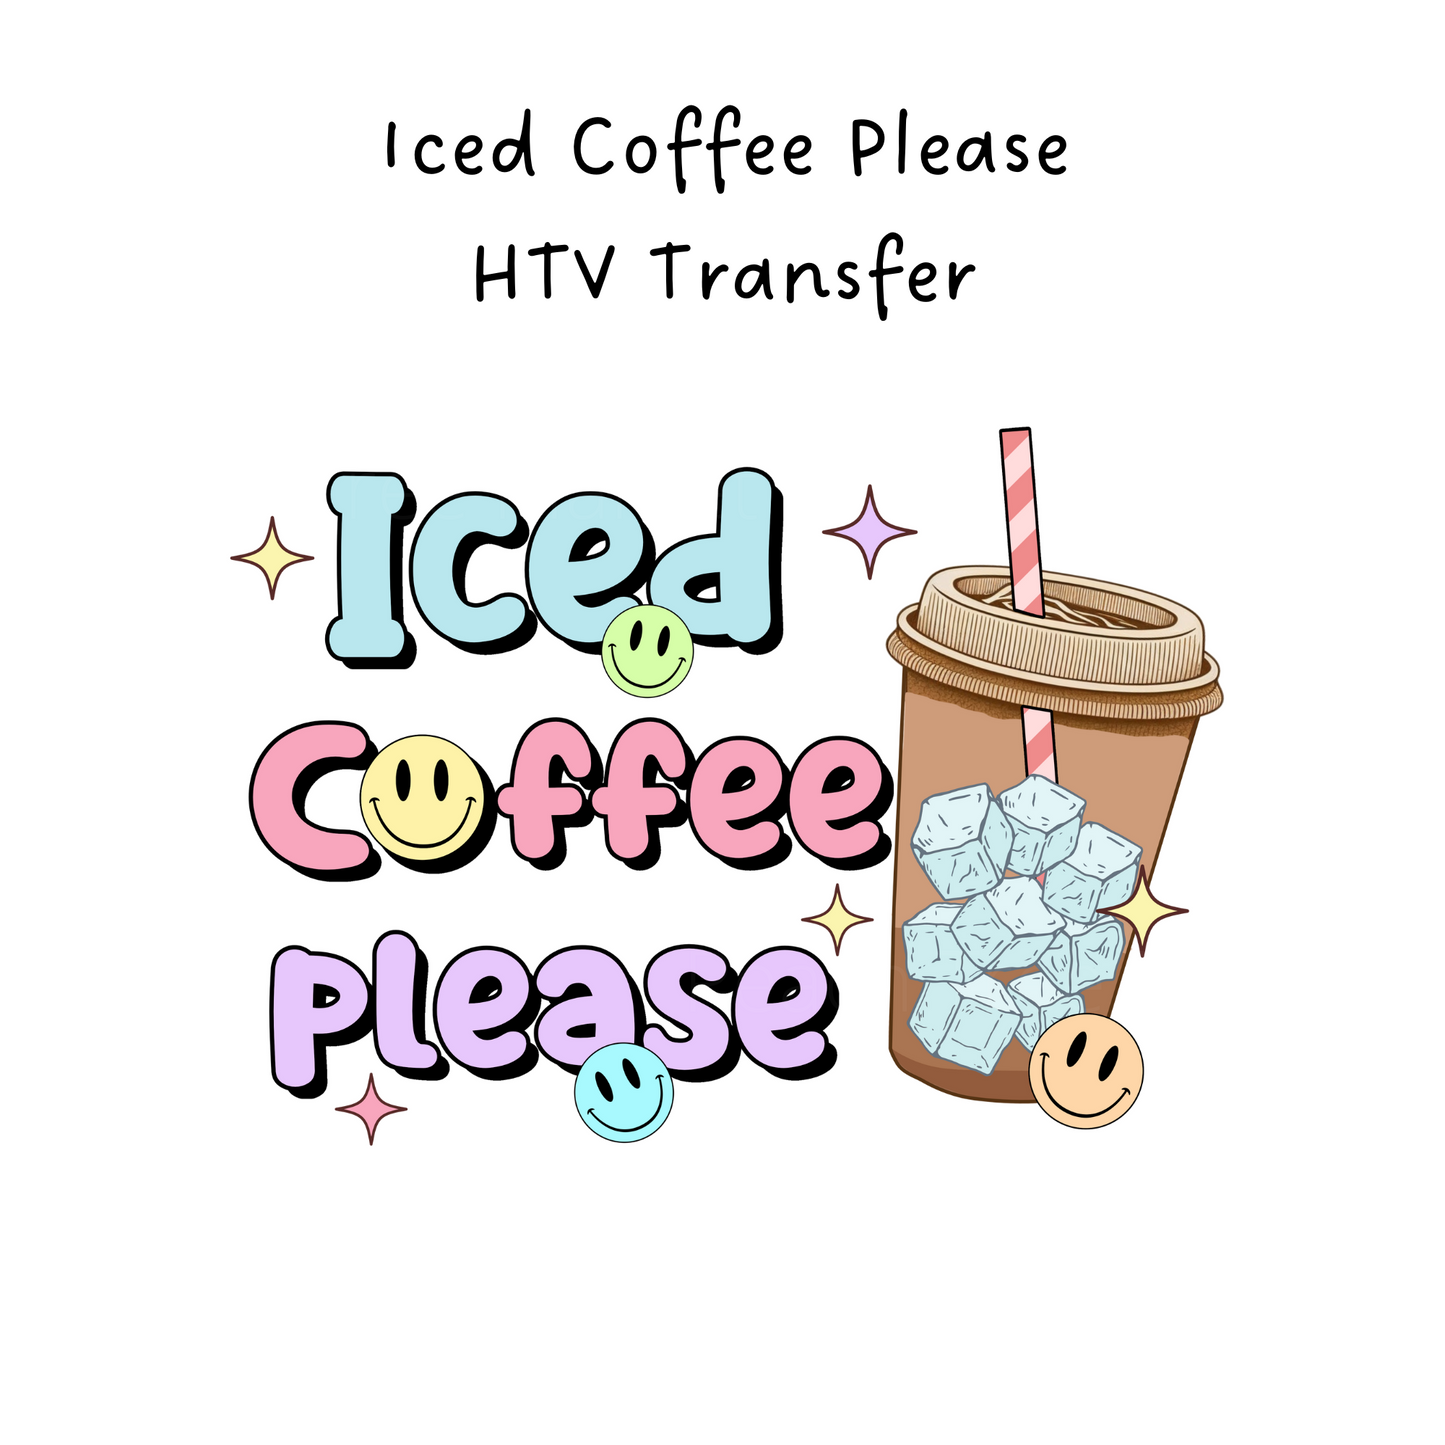 Iced Coffee Please HTV Transfer